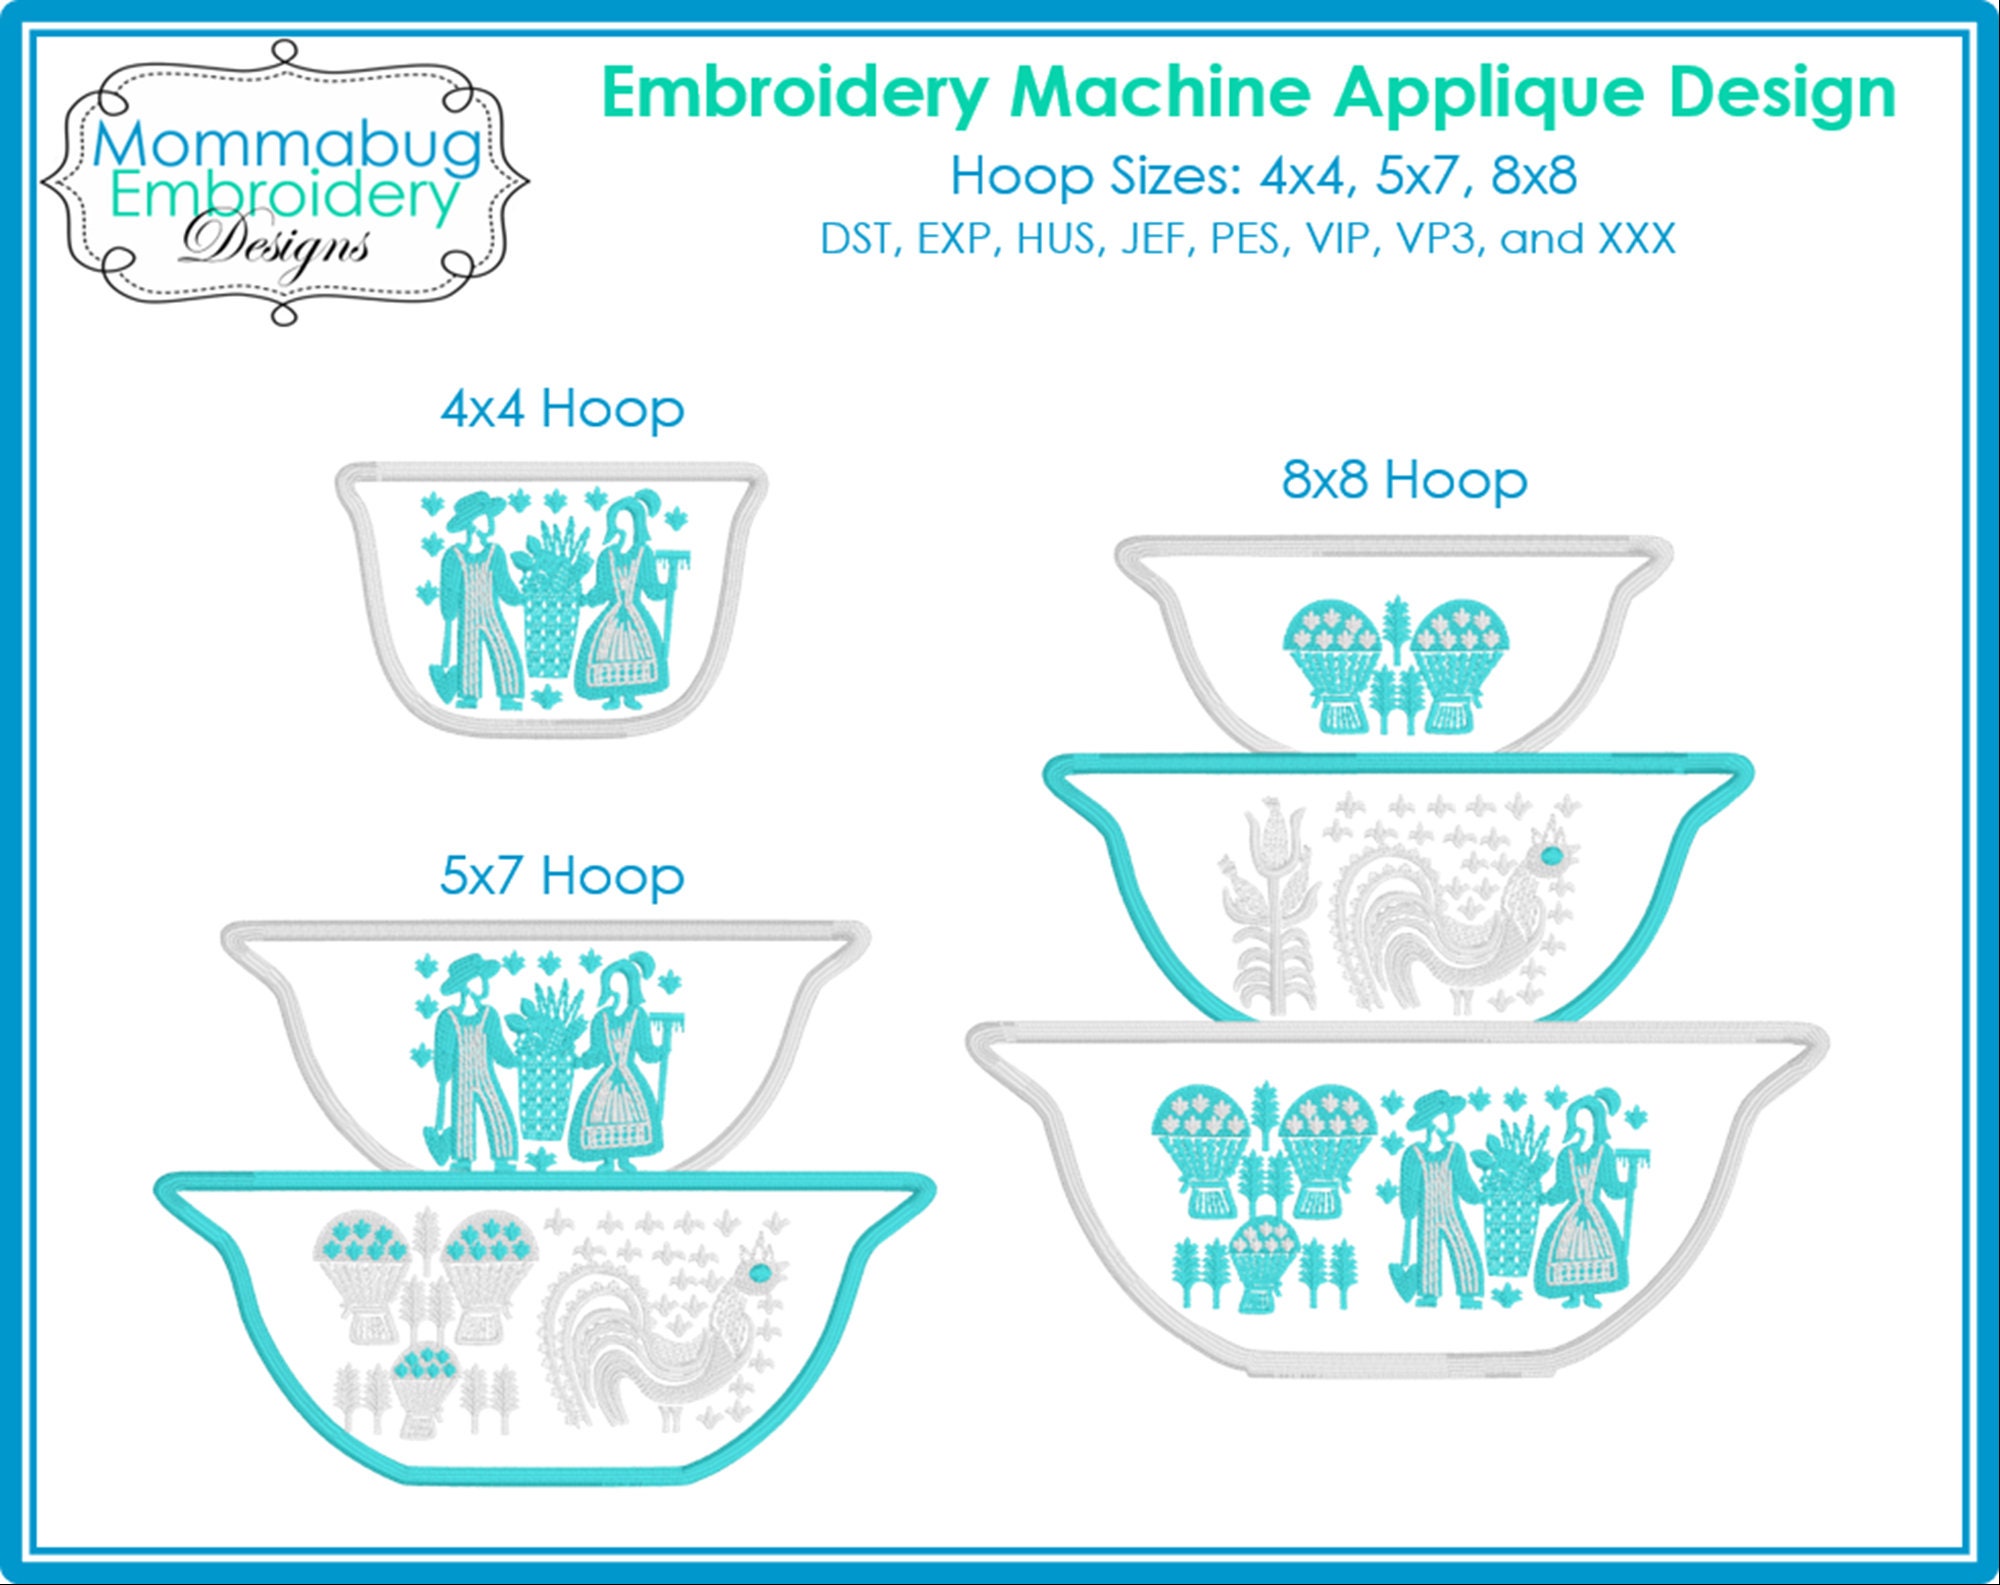 Butterprint Pyrex Bowls Stacked Applique DIGITAL Embroidery Machine Design File